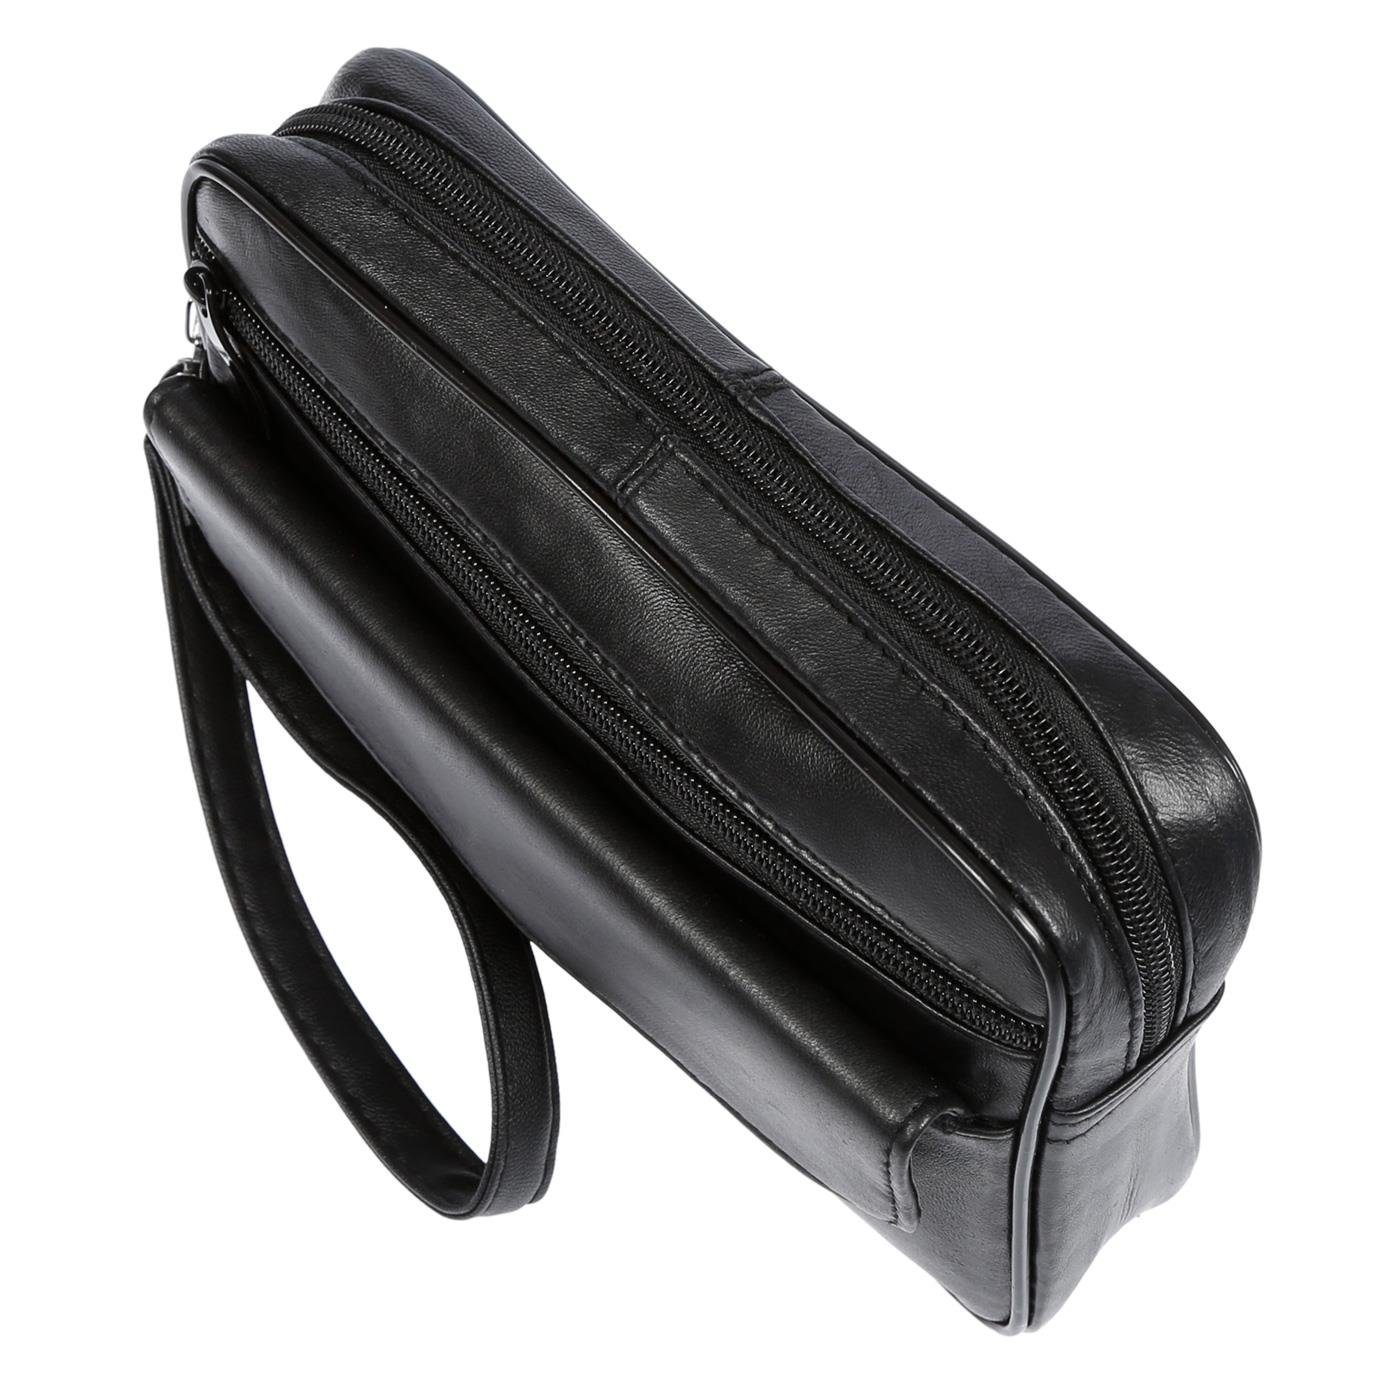 Handgelenktasche Herren Smartphonefach Schwarz Leder Christian Wippermann XL Herrentasche, Handgelenktasche Tasche echt